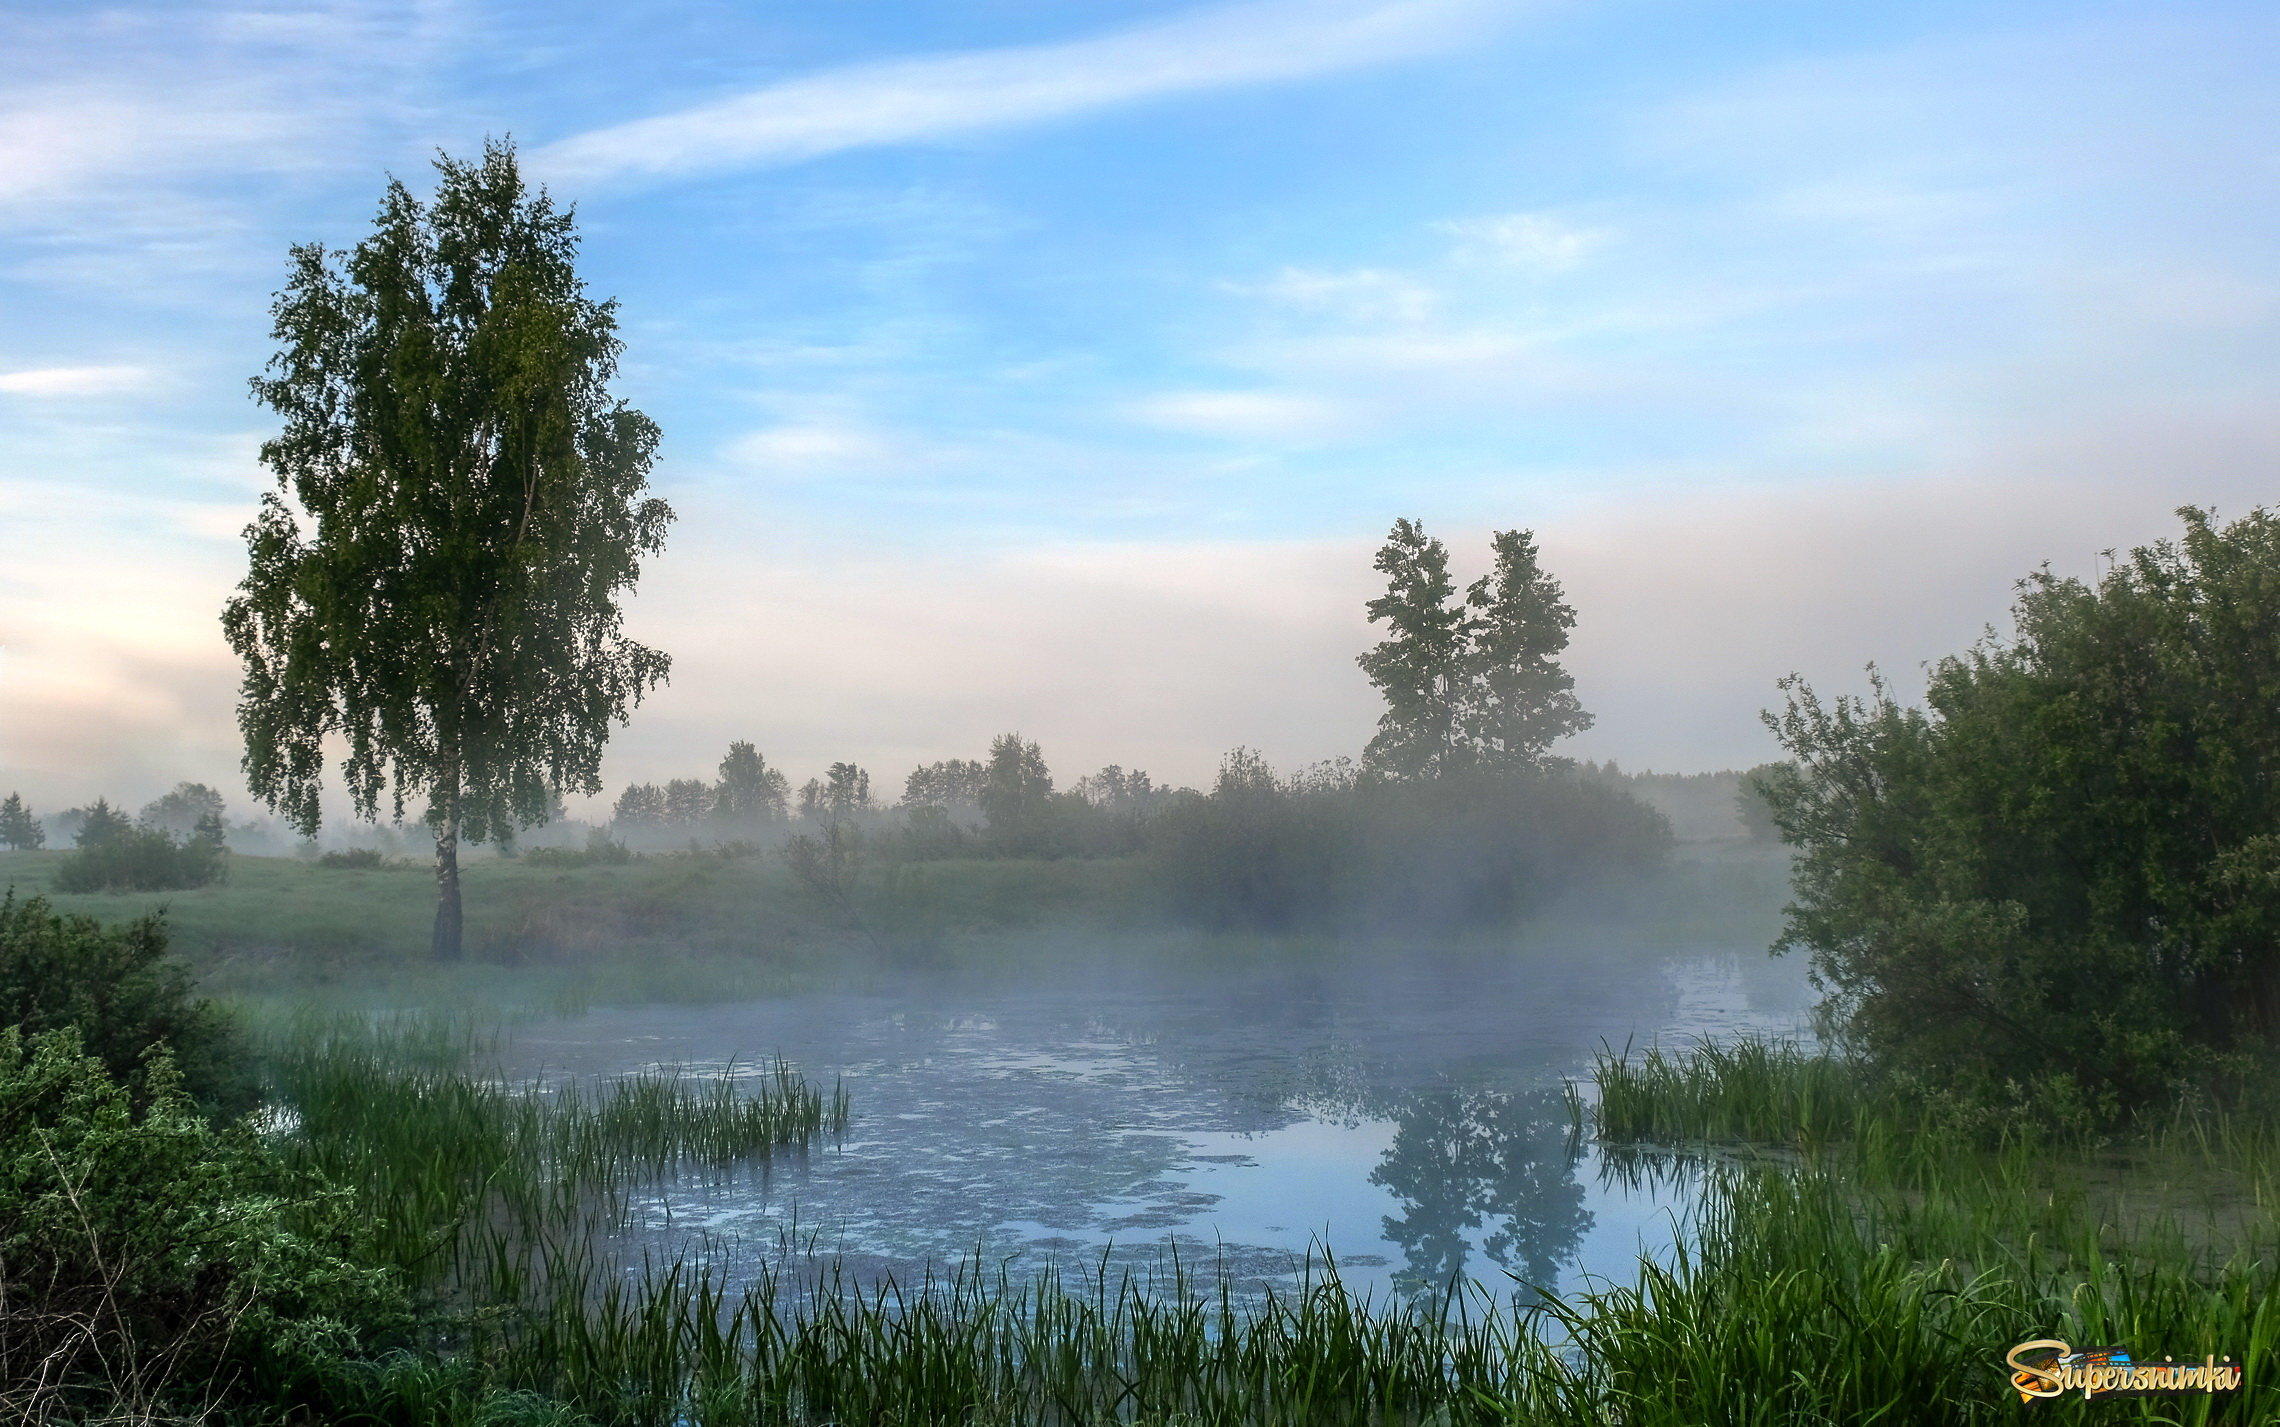 Легкий туман дымка. Летний пейзаж. Летний пейзаж фото. Летние туманы. Москва-река пейзажи летние.